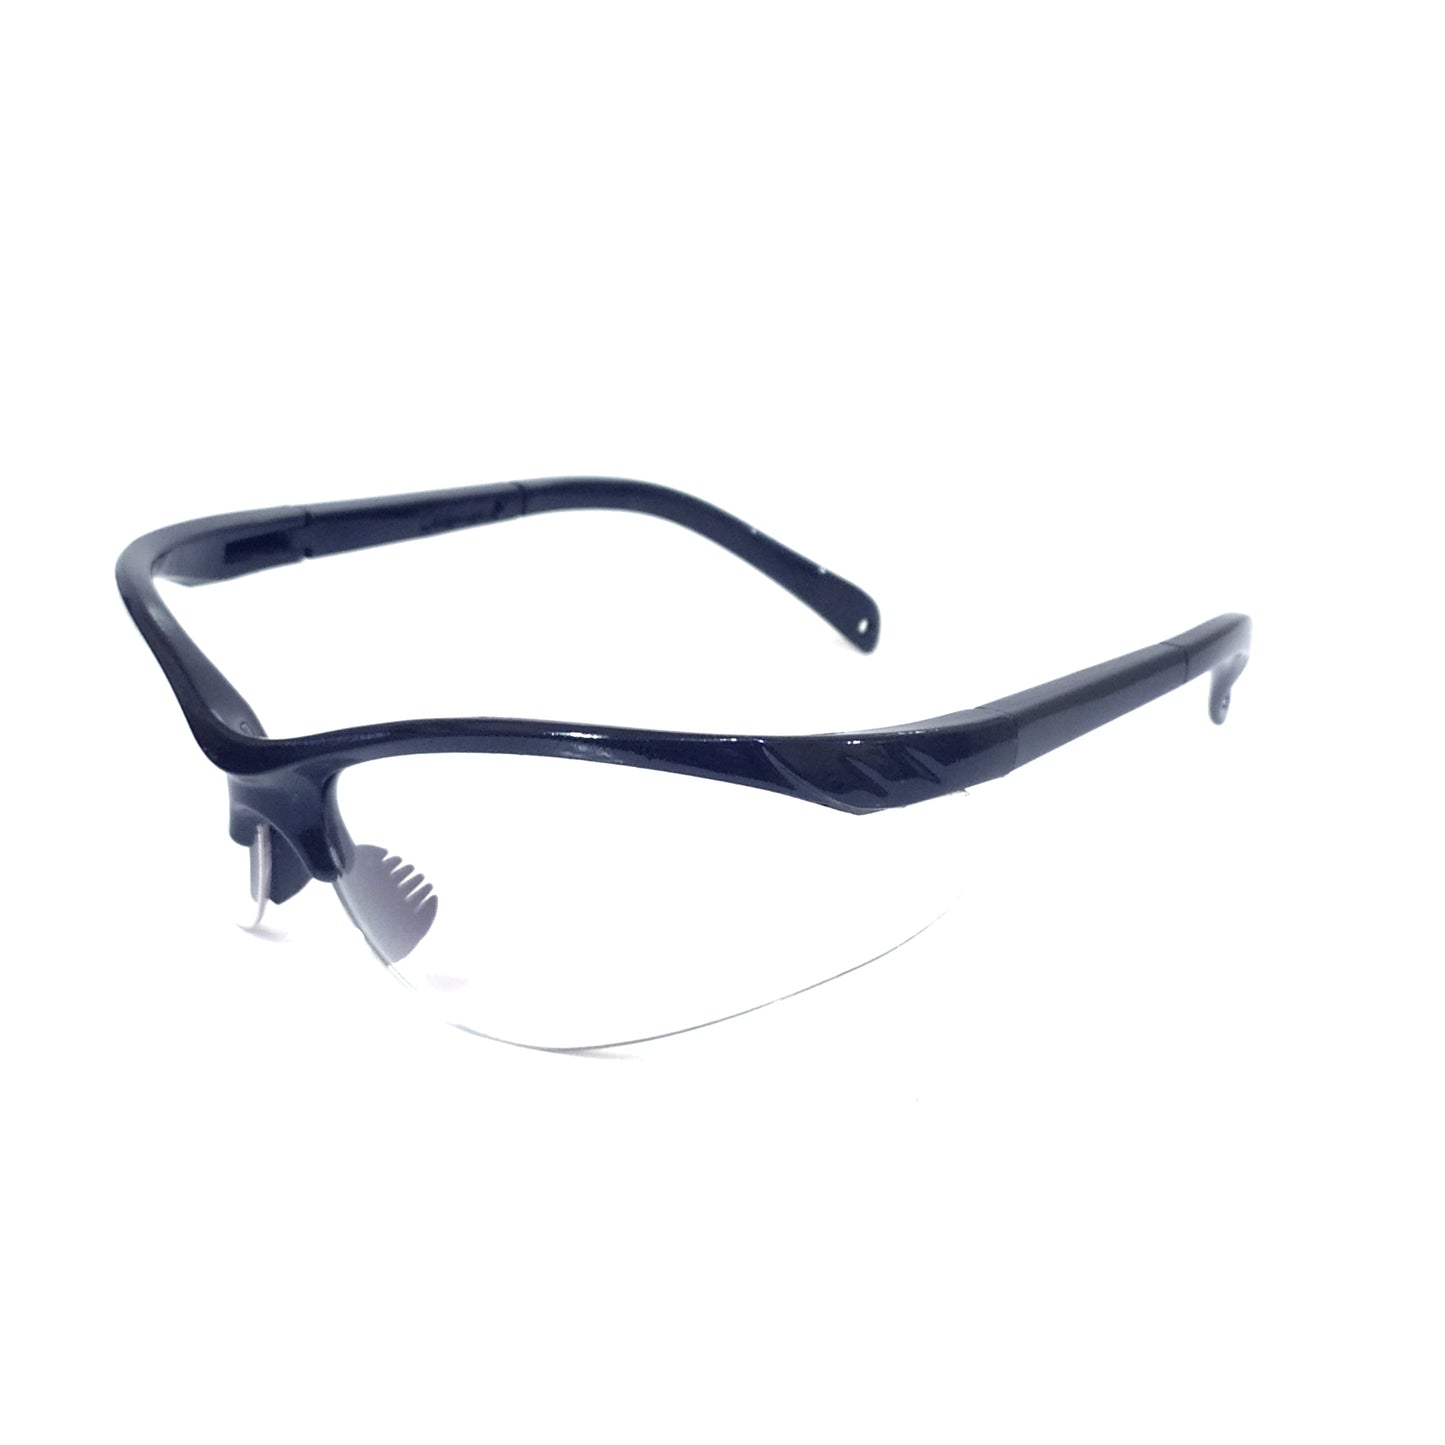 Clear Anti Fog Sports Driving Glasses Cycling Biker Sunglasses Riding Eyewear